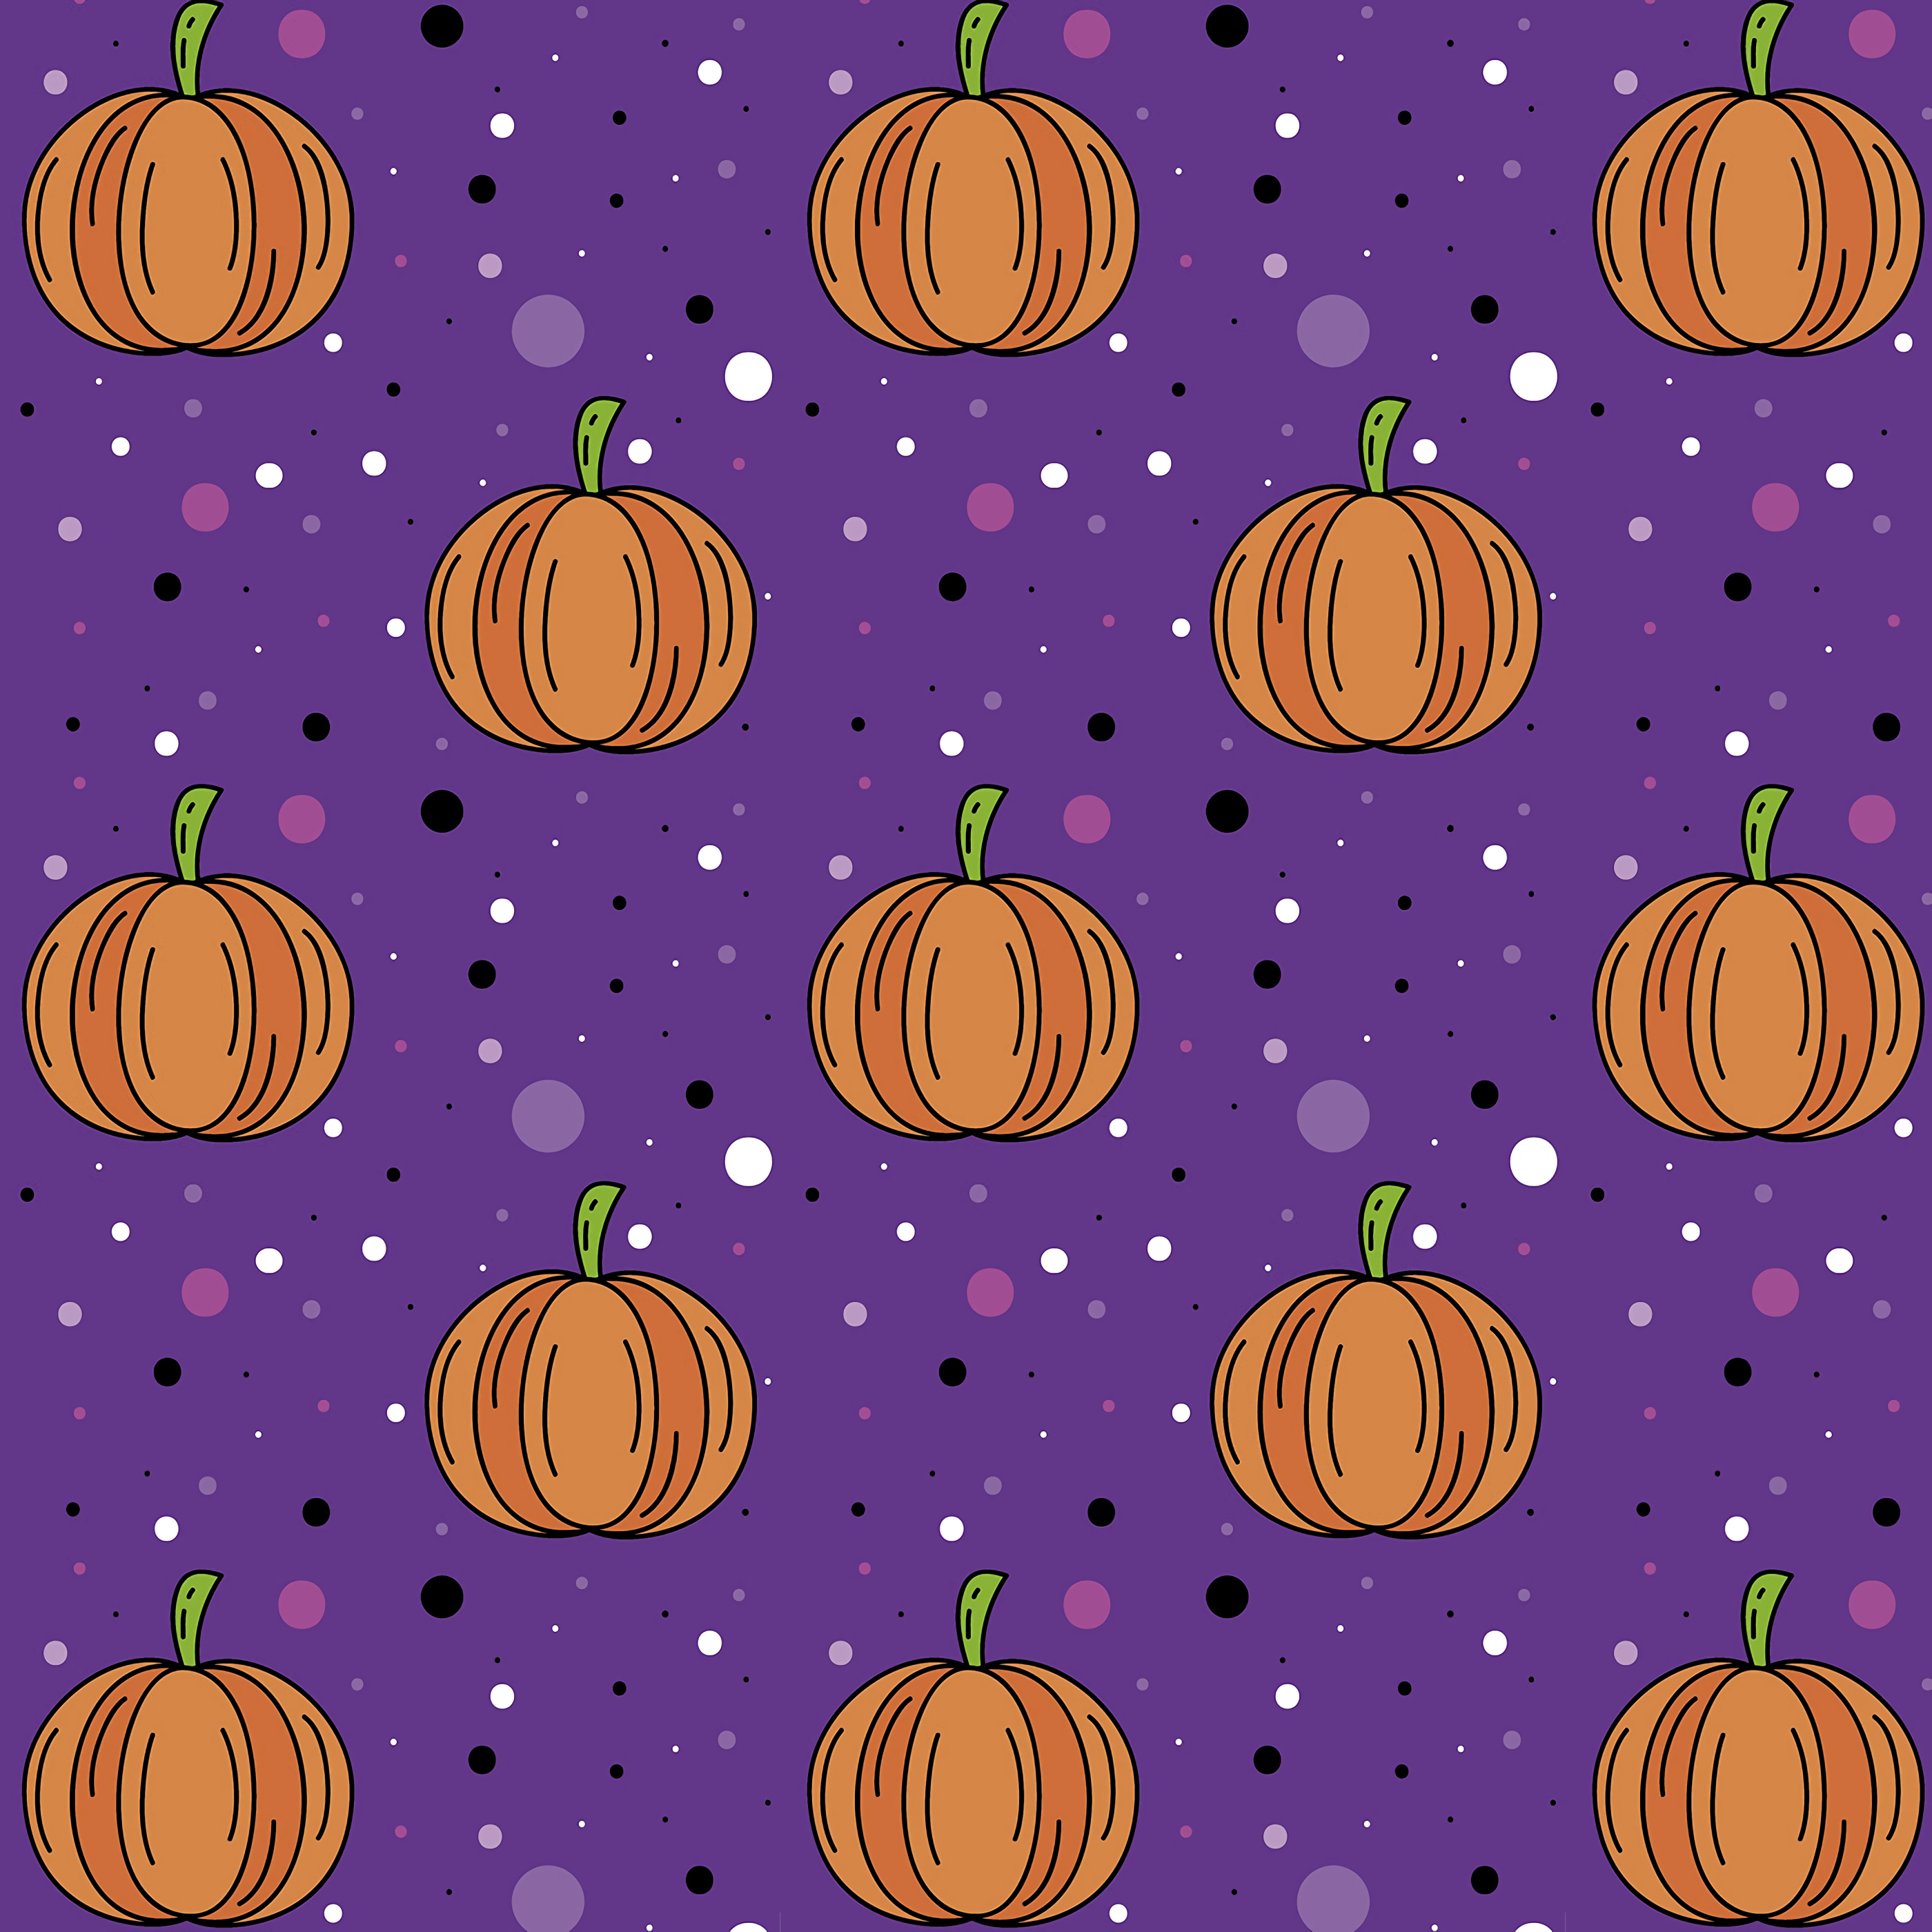 Pumpkin 1920 x 1080 HD Wallpaper